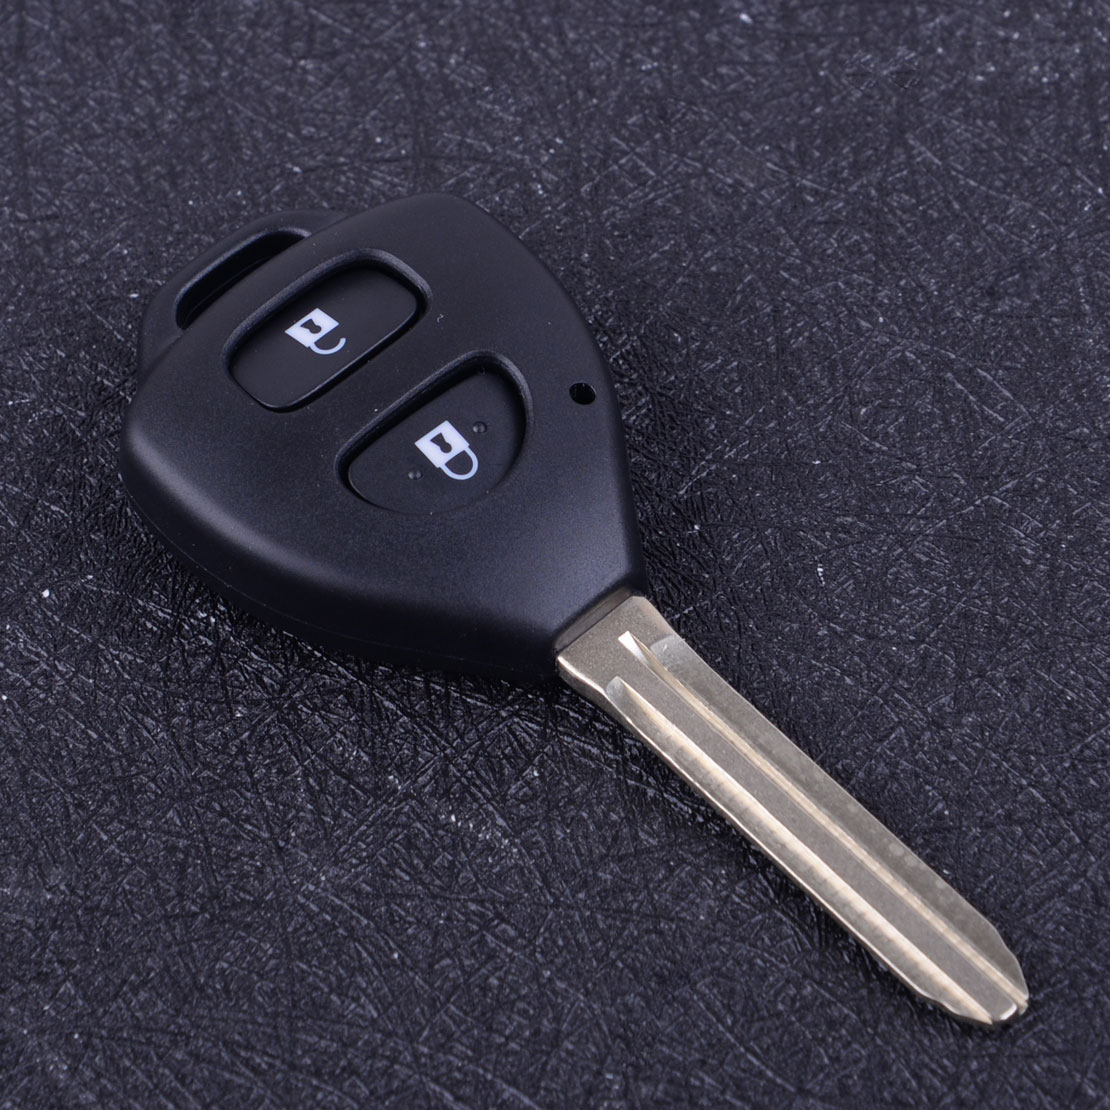 Pad for Toyota RAV4 Camry Corolla Prado New Remote Key Fob Case Shell 2 Buttons